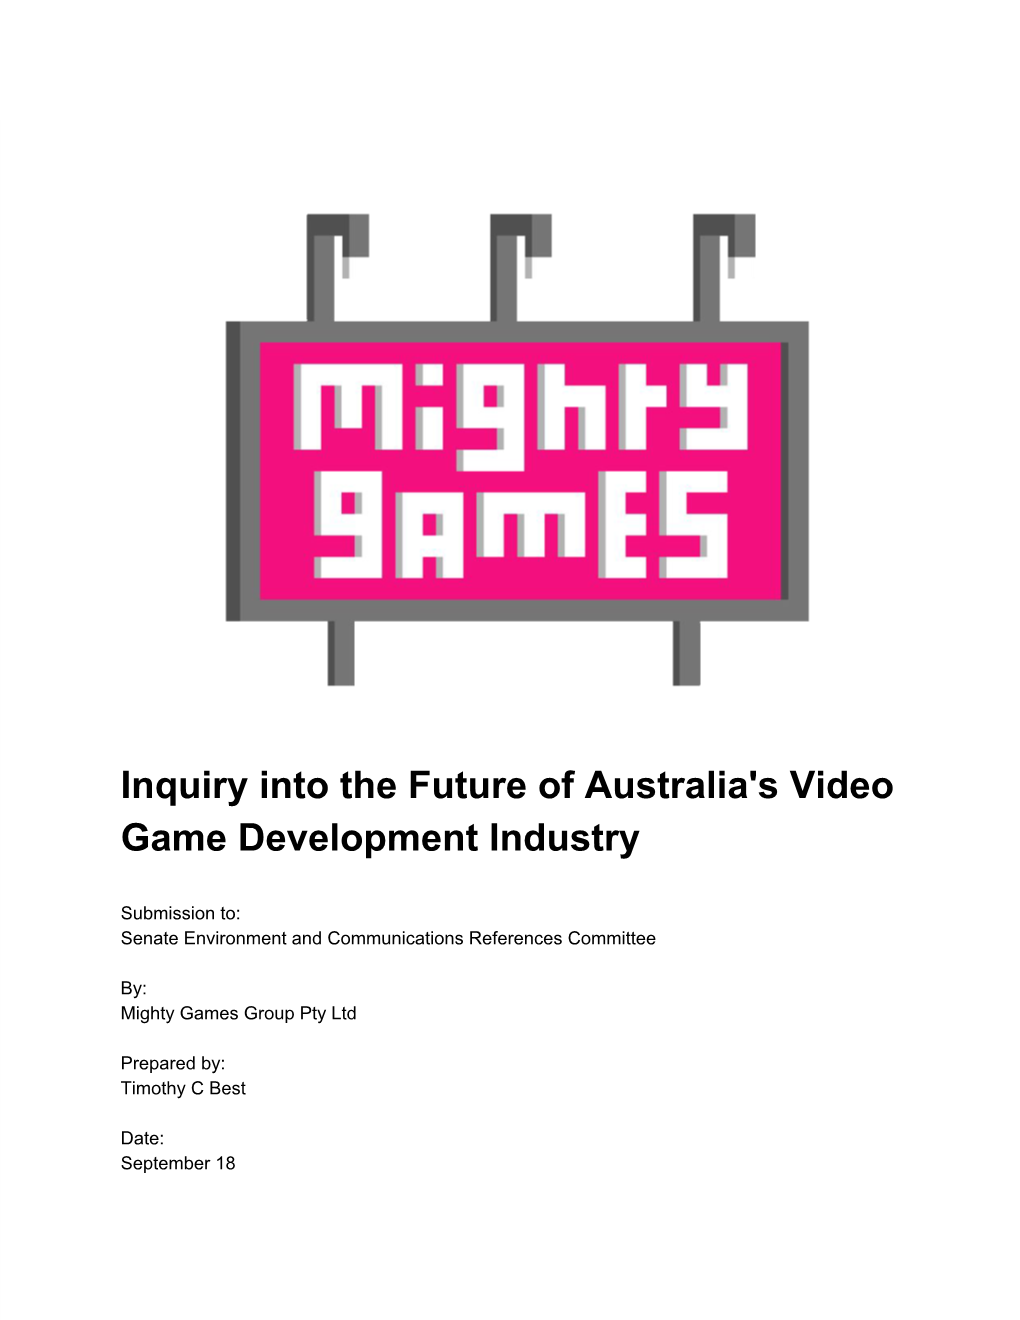 Inquiry Into the Future of Australia's Video Game Development Industry